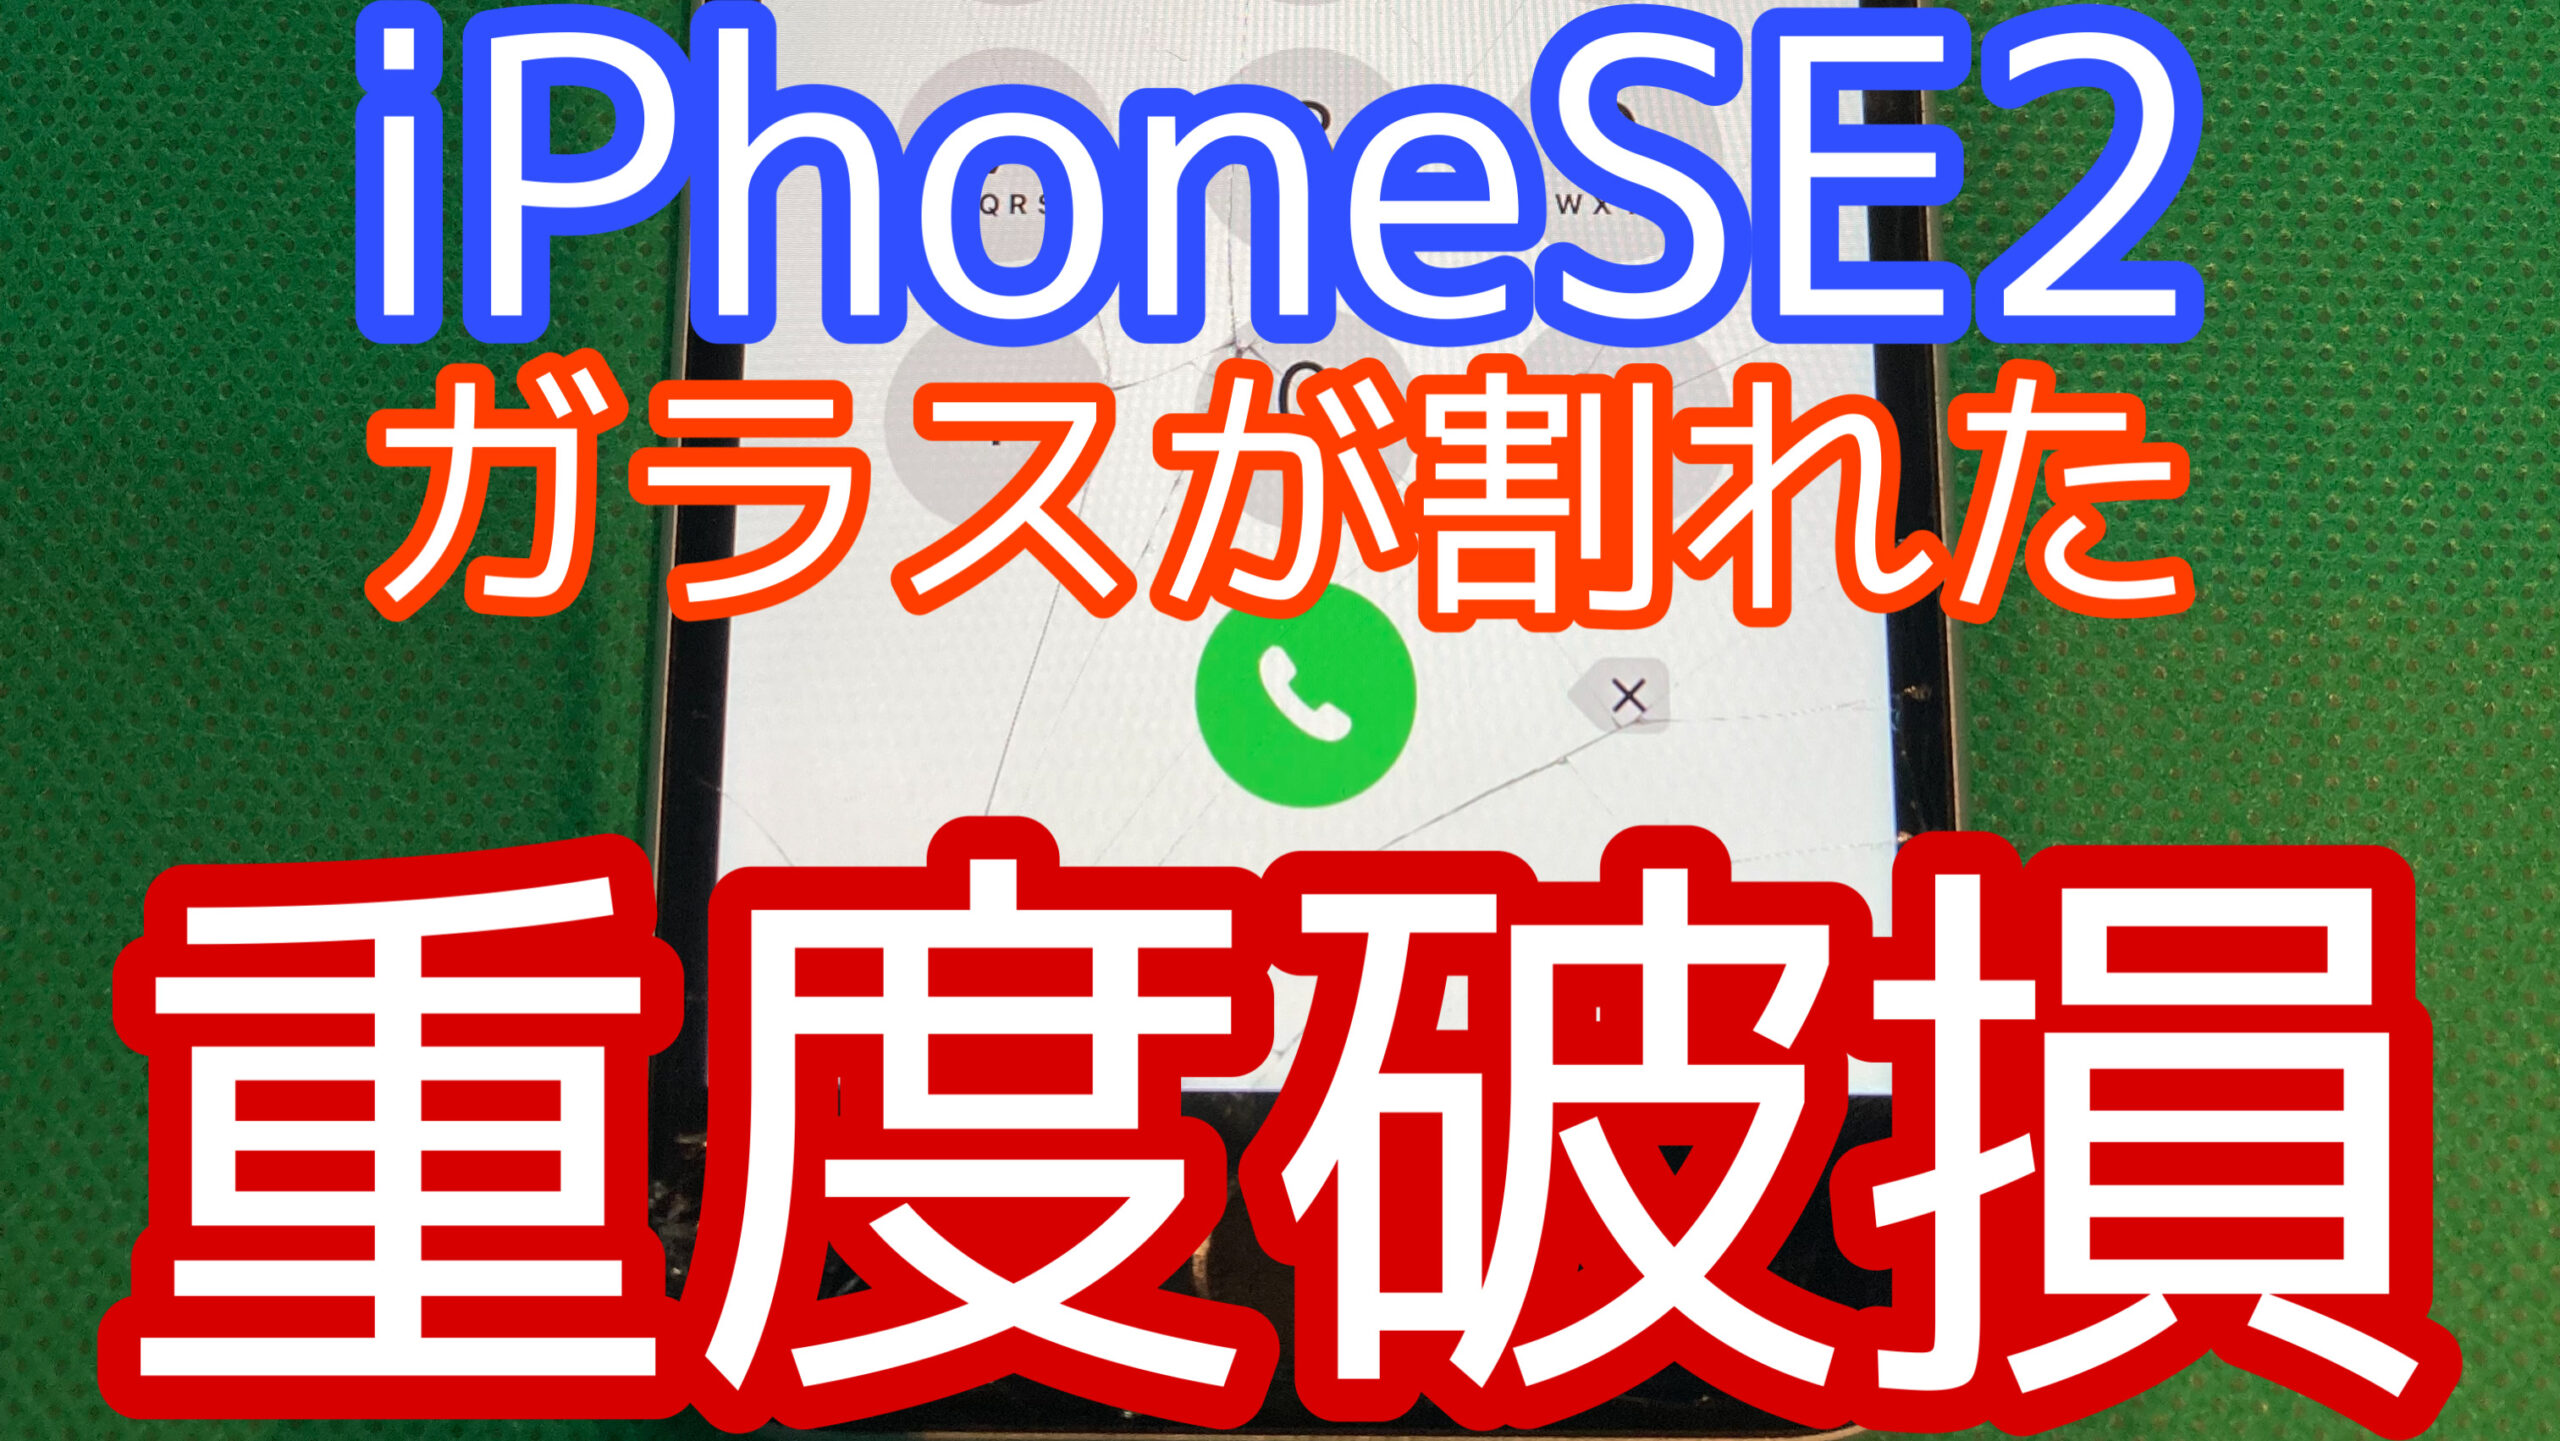 iPhoneSE2アイキャッチ画像